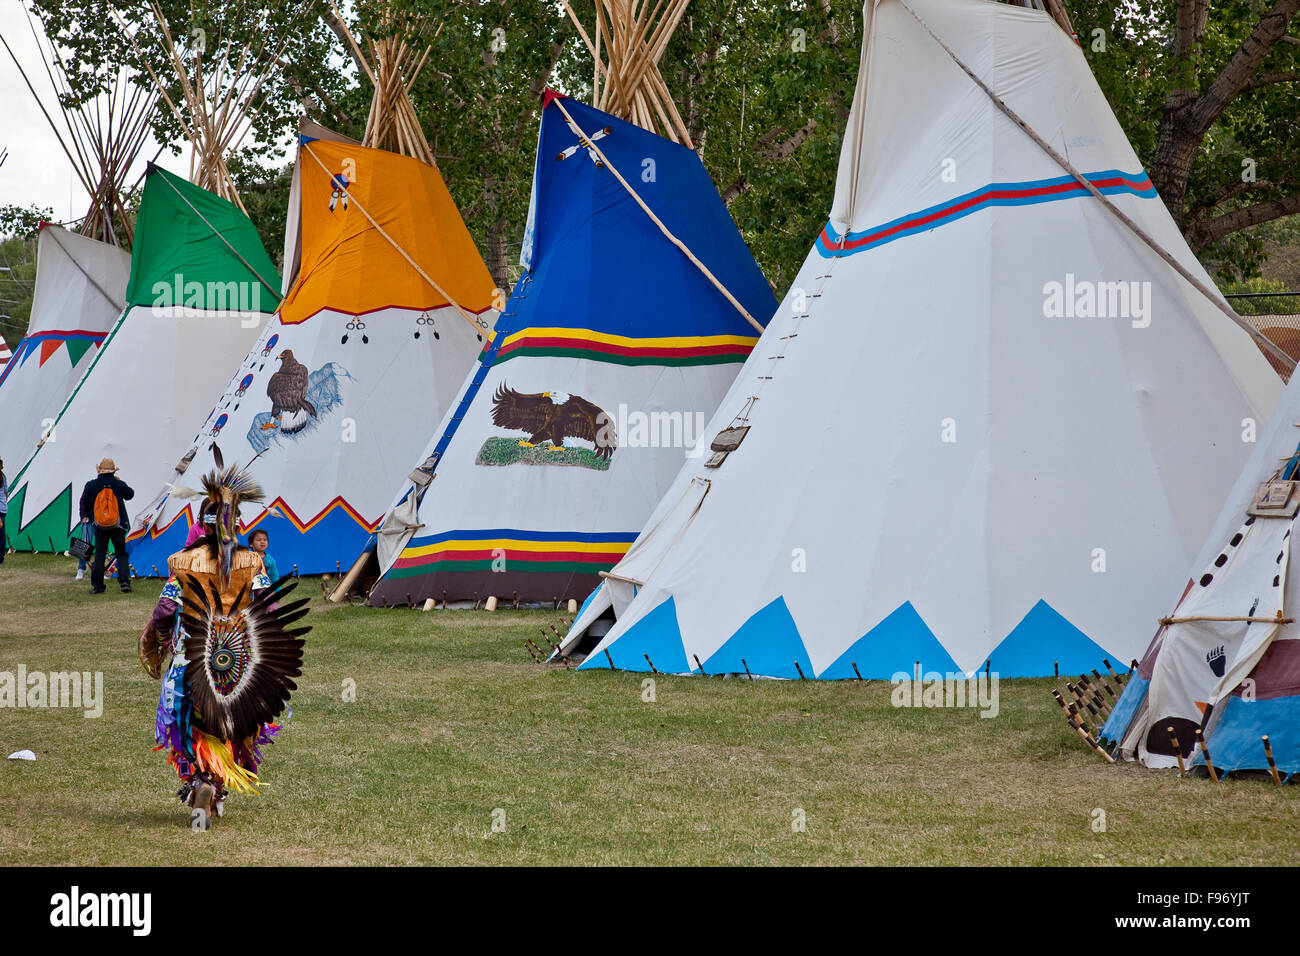 Indian Village, 2015 Calgary Stampede, Calgary, Canada. Stock Photo